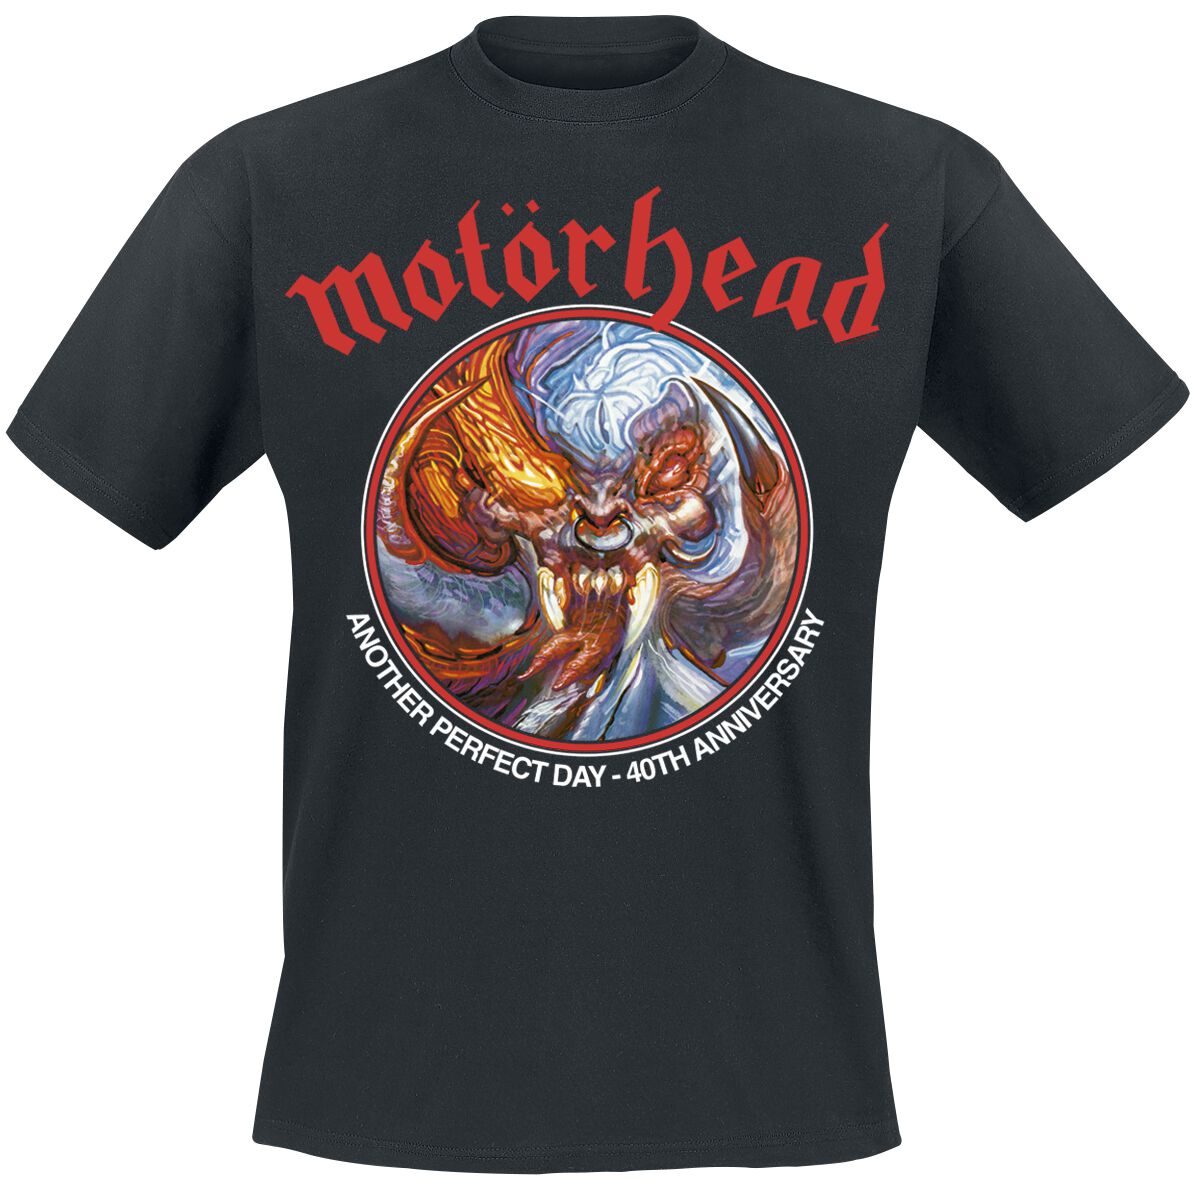 Motörhead Another Perfect Day Anniversary T-Shirt schwarz in XL